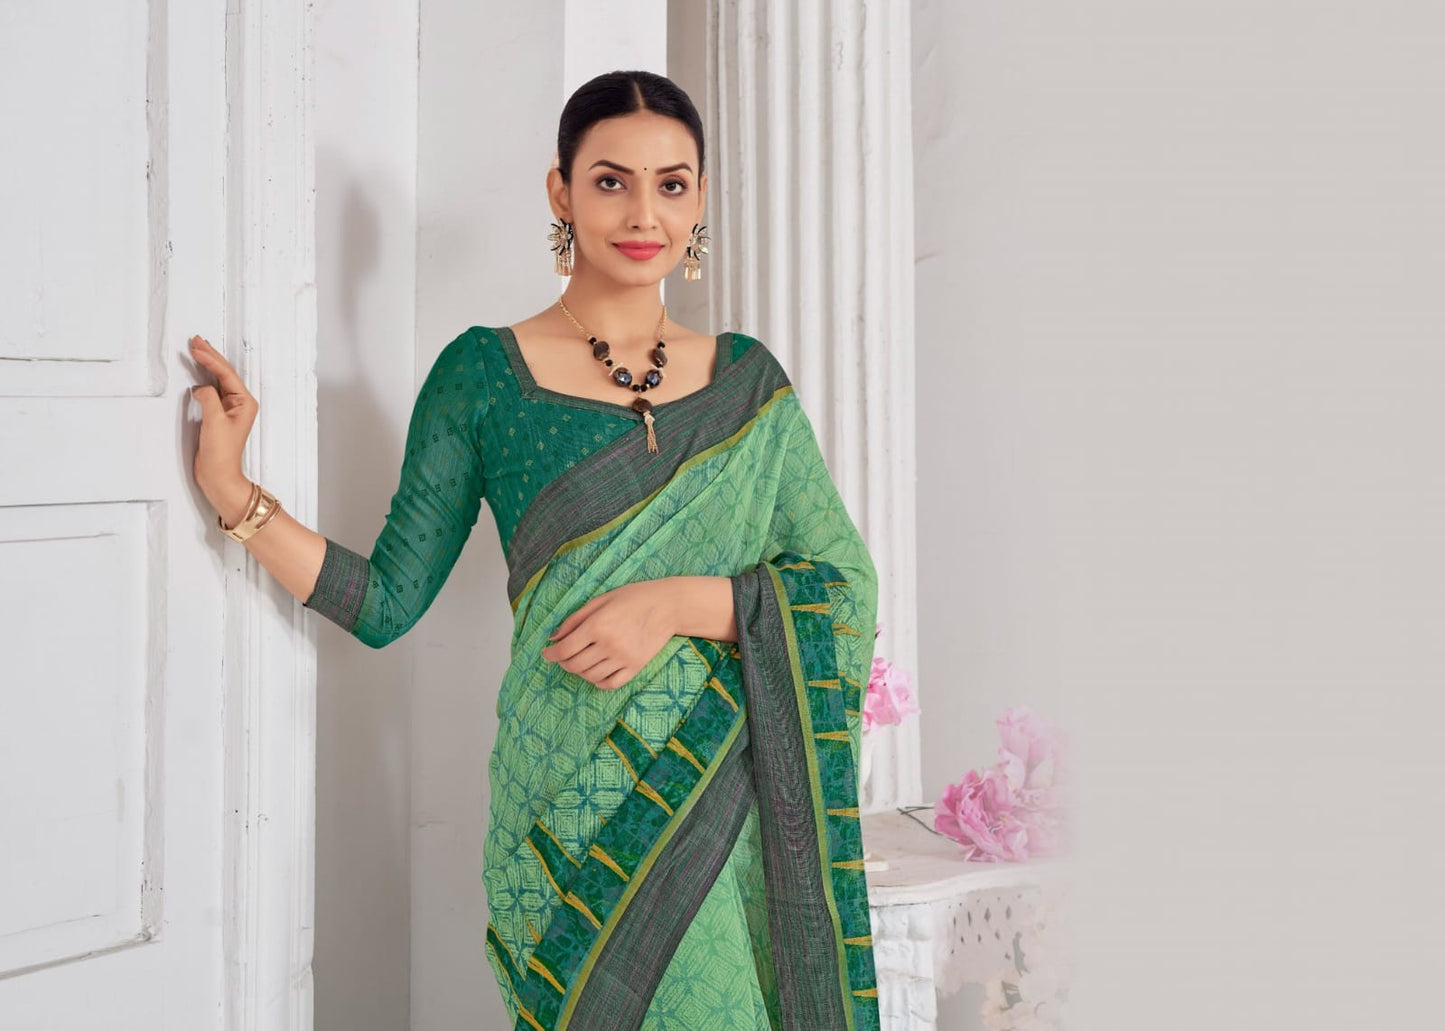 Vidhya Ruchi Soft Linen Sarees Manufacturer India